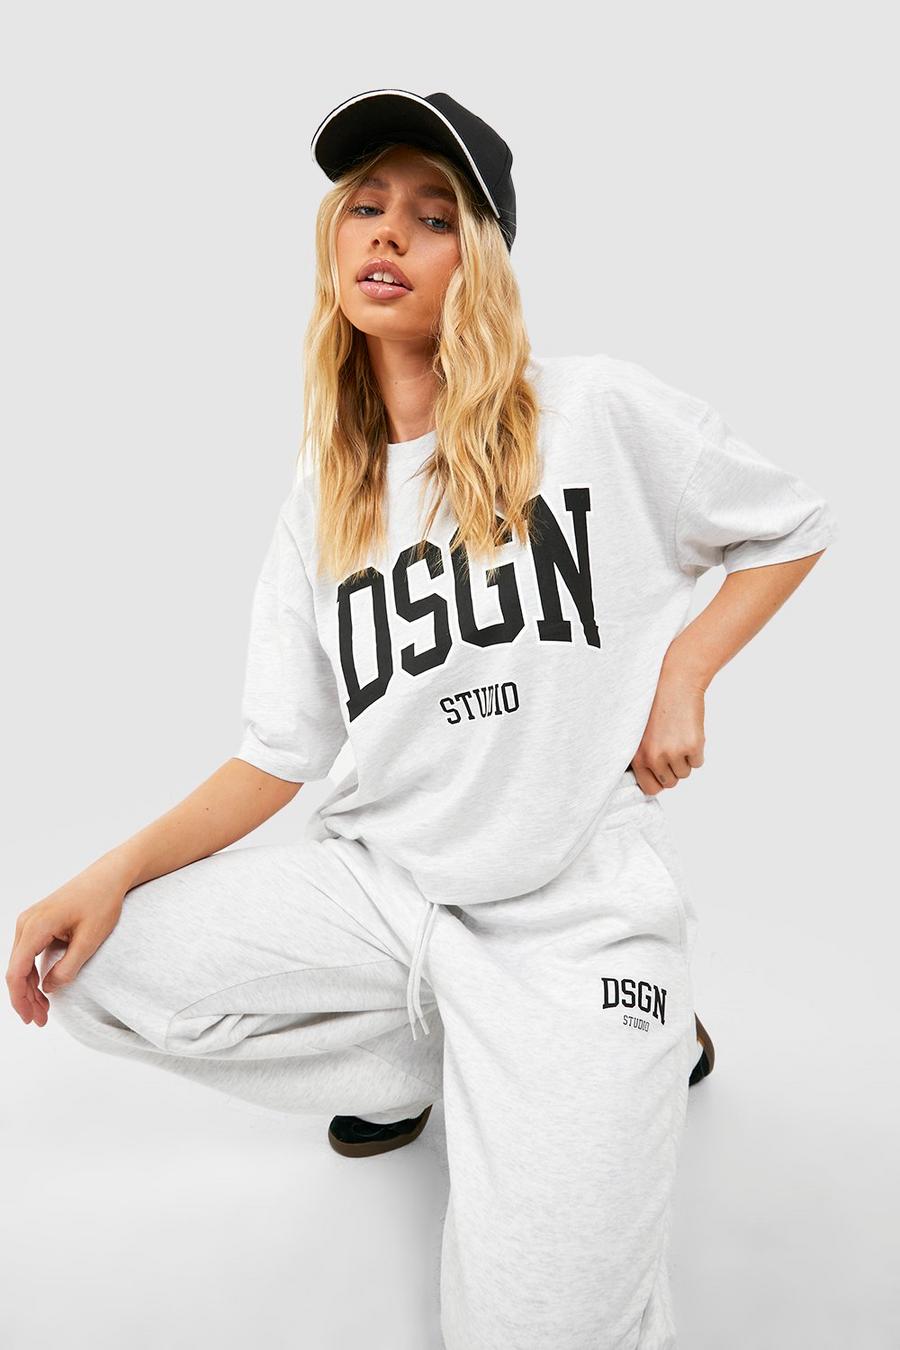 T-Shirt und Jogginghose mit Dsgn Studio Slogan, Ash grey